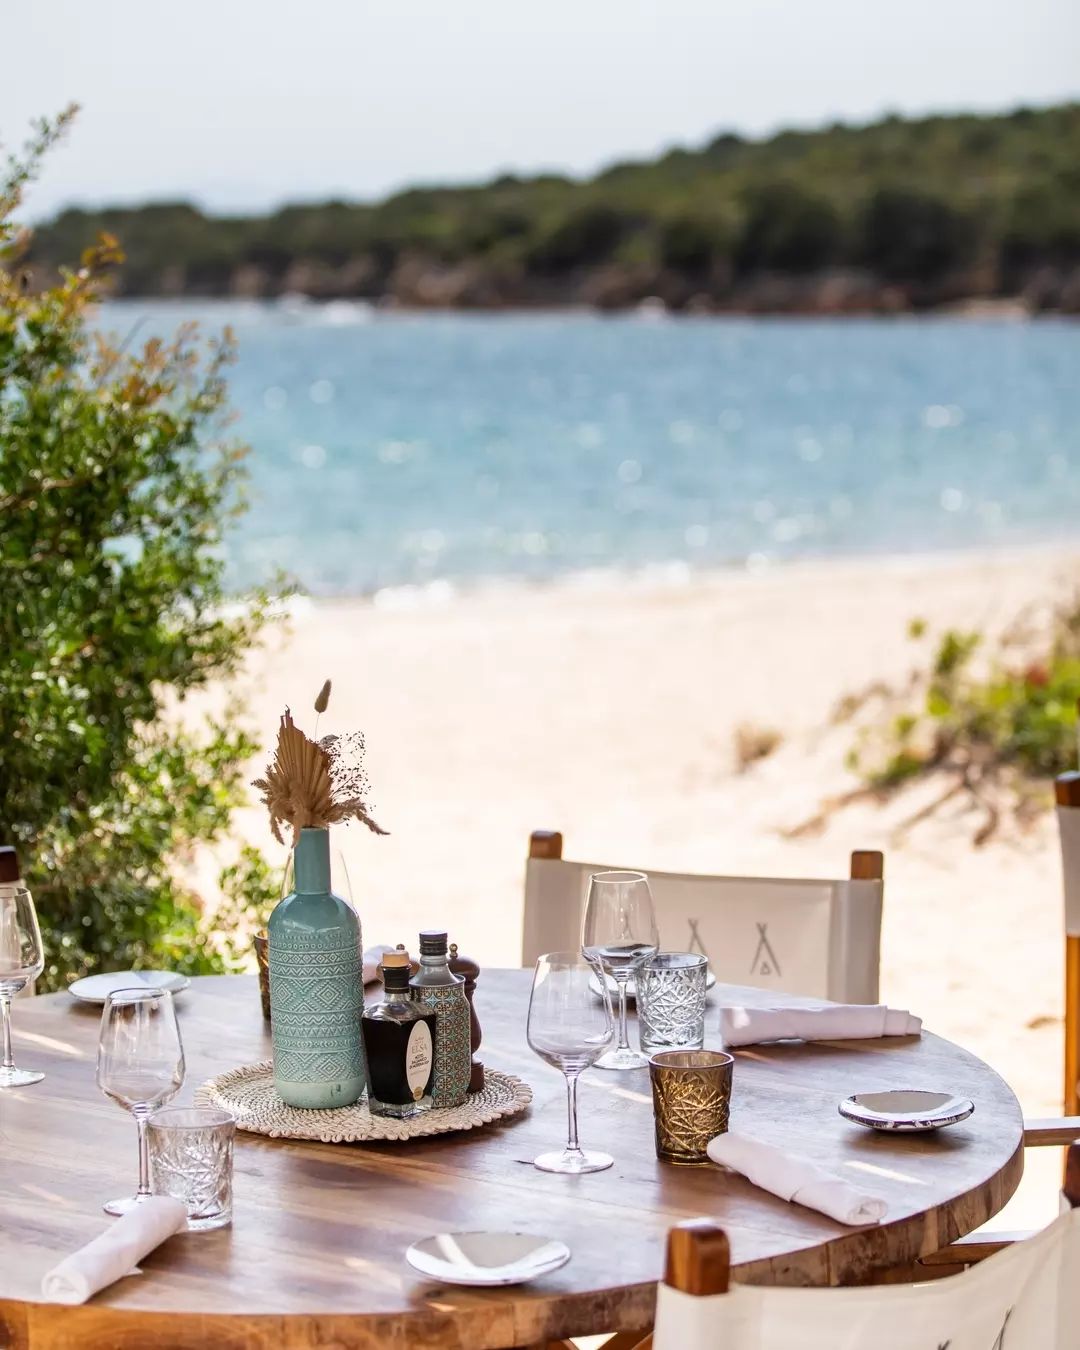 Dining where the sea meets the sand at Nikki Beach Costa Esmeralda - Sardinia - Top 10 Beach Bars